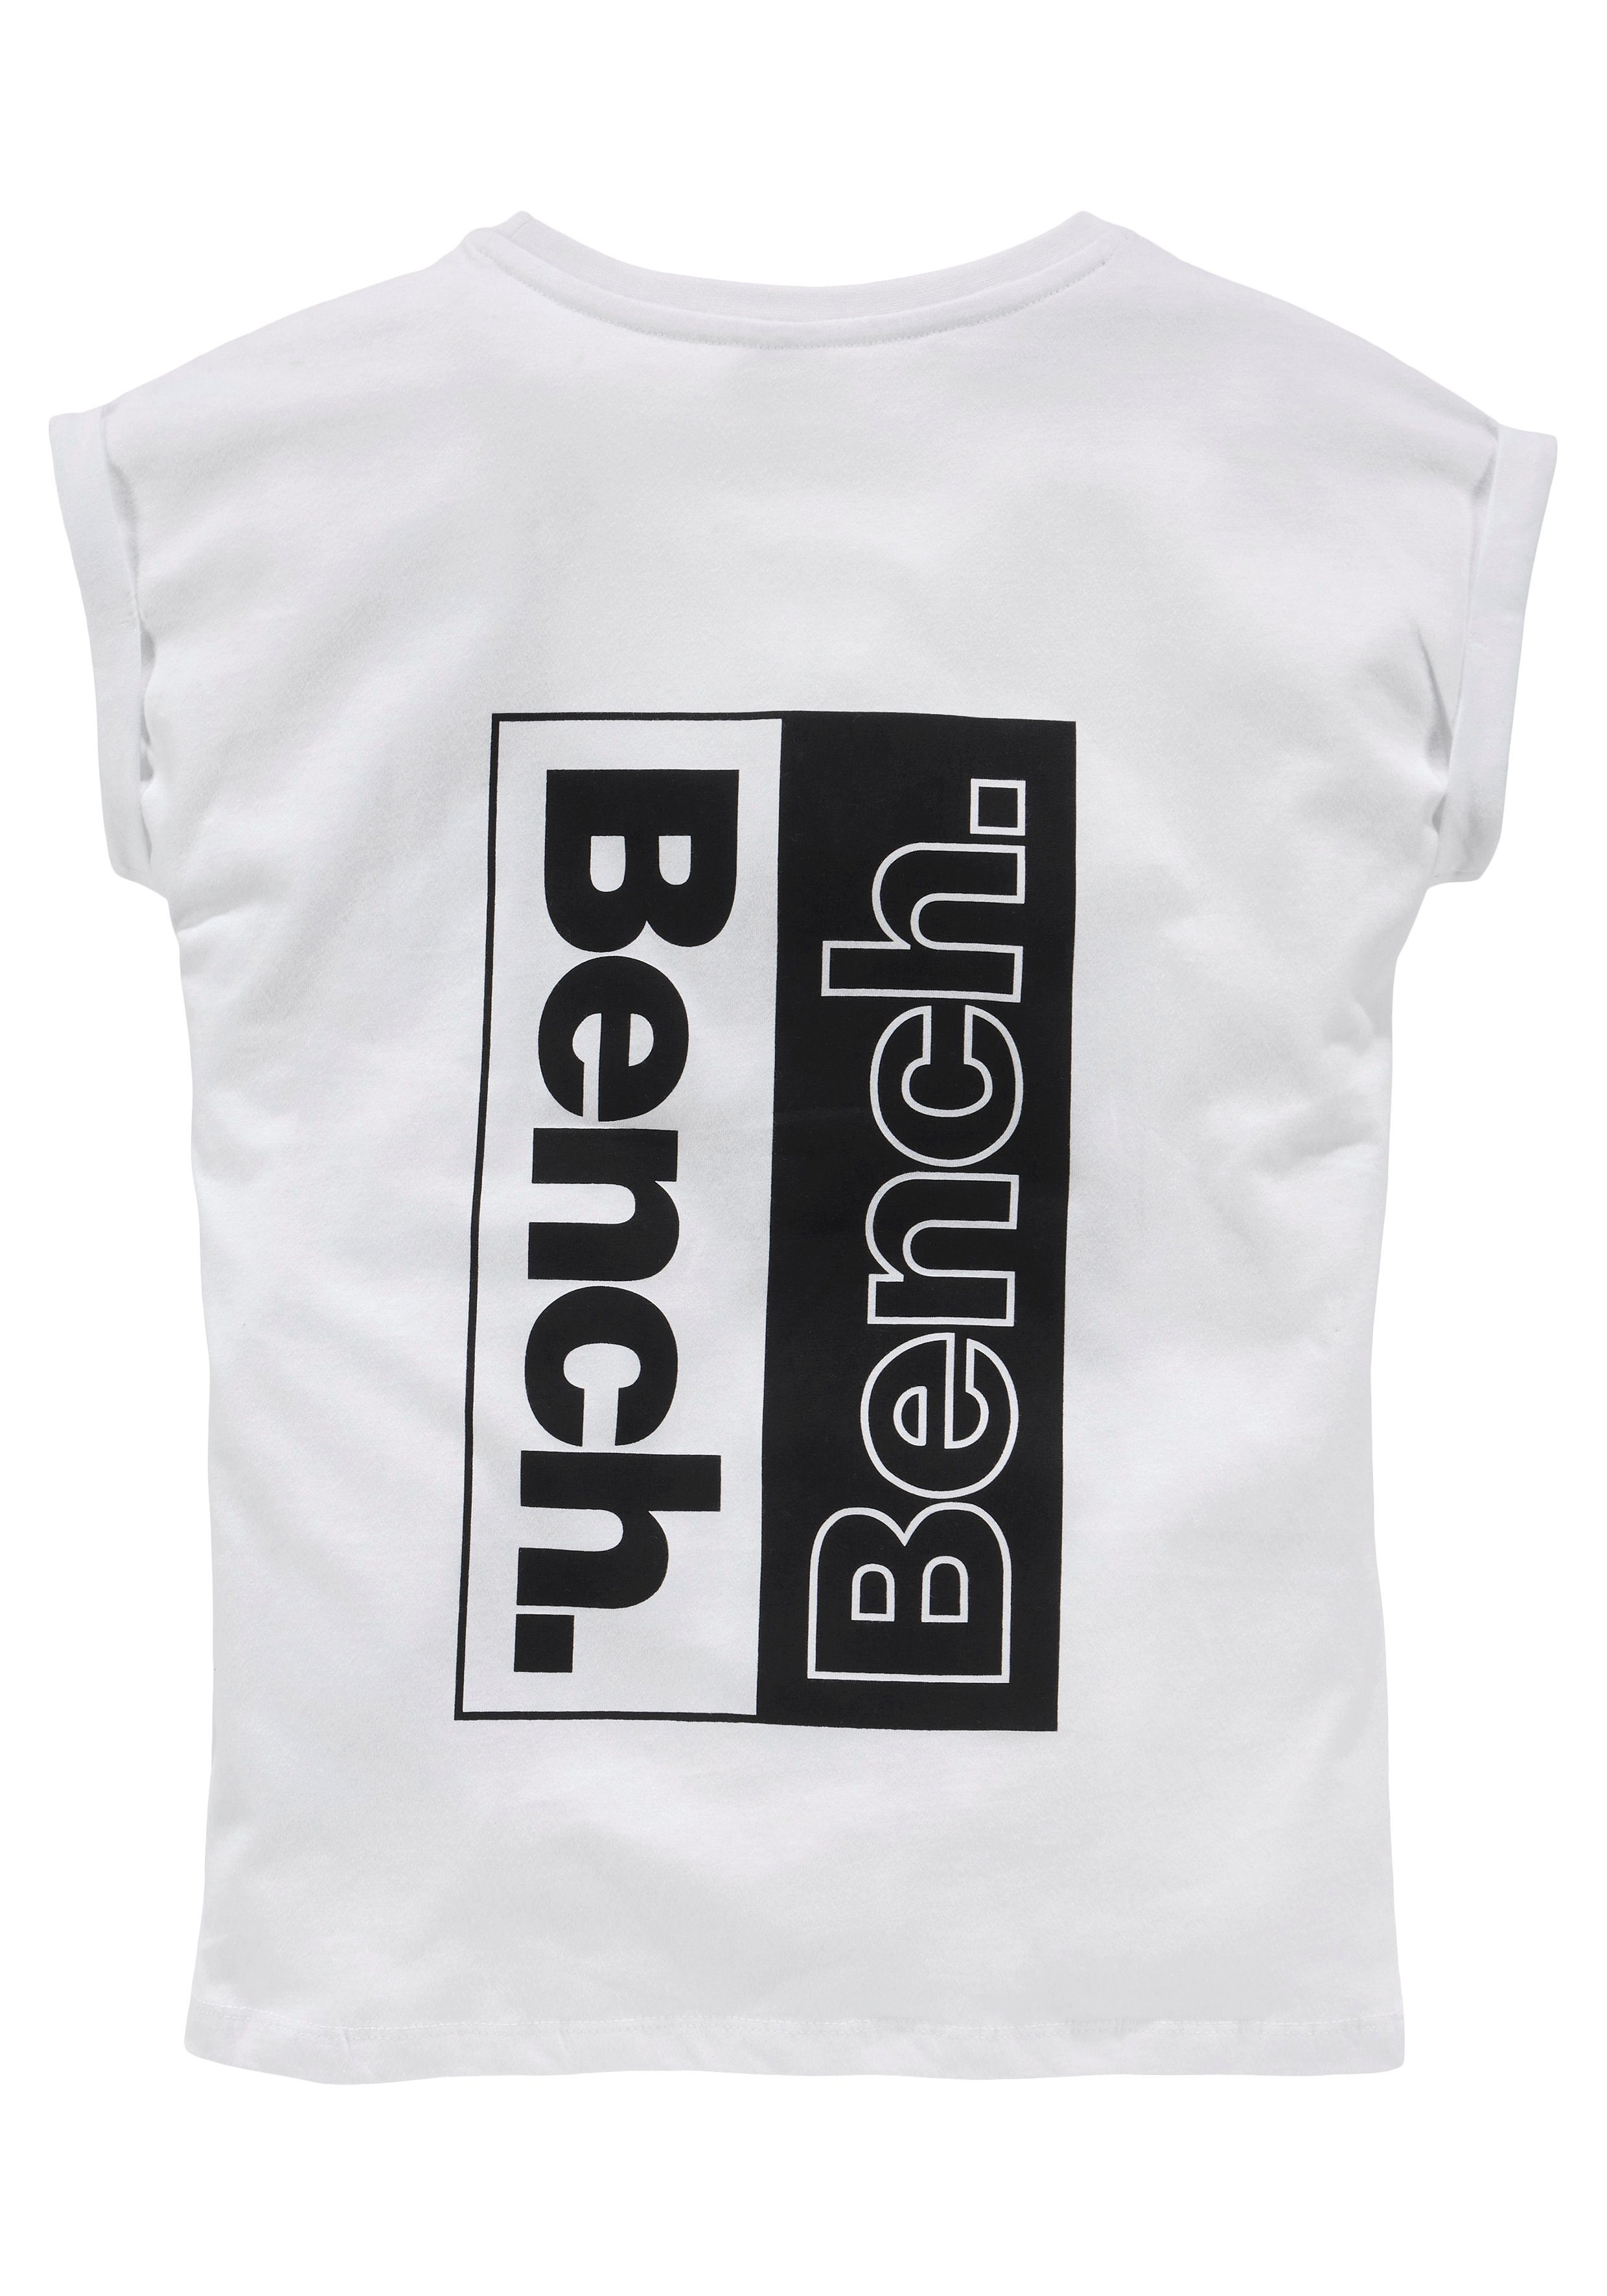 Bench. mit Logo Rückendruck T-Shirt